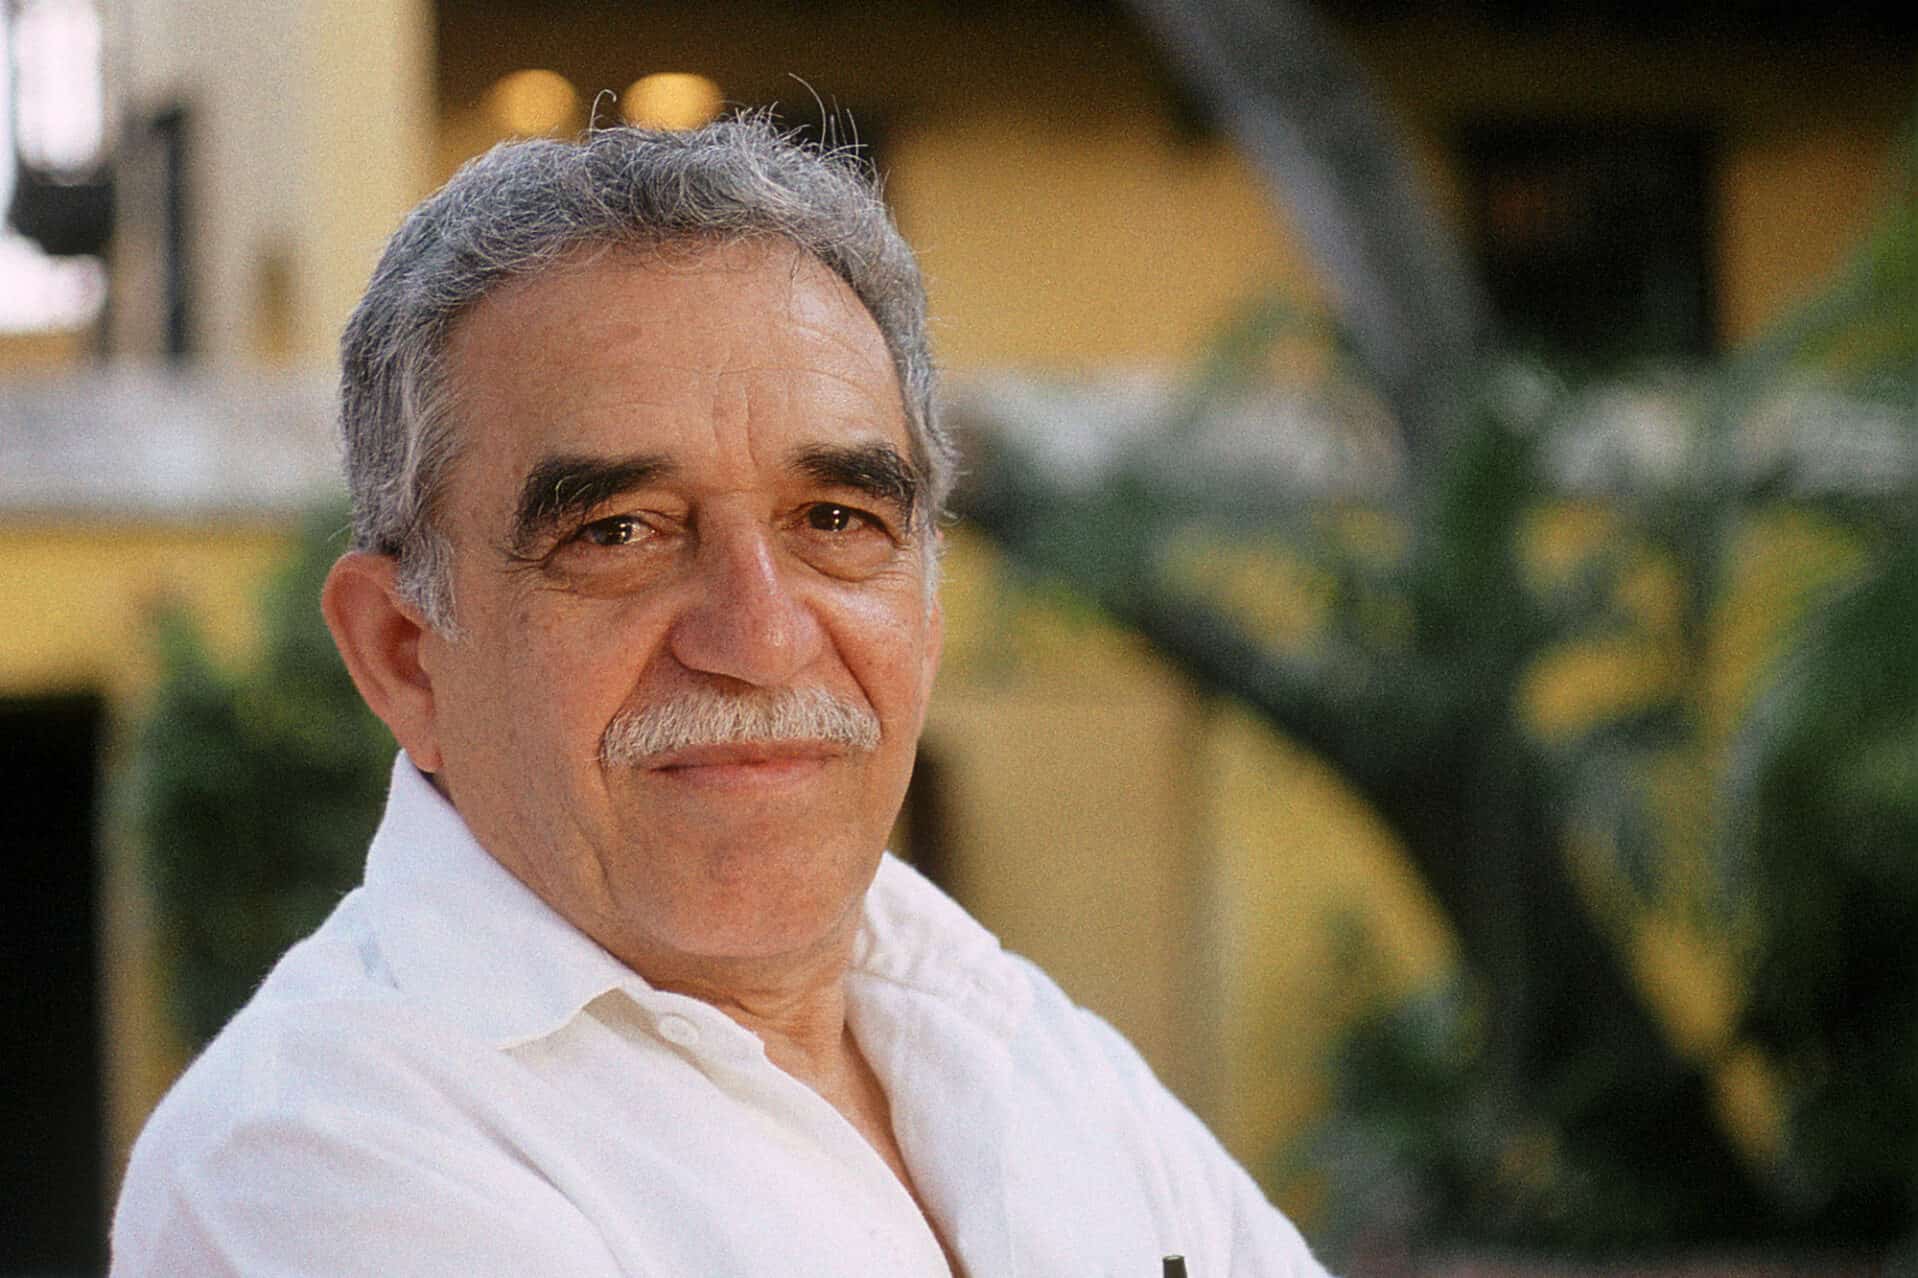 Gabriel Garcia Marquez was a successful author